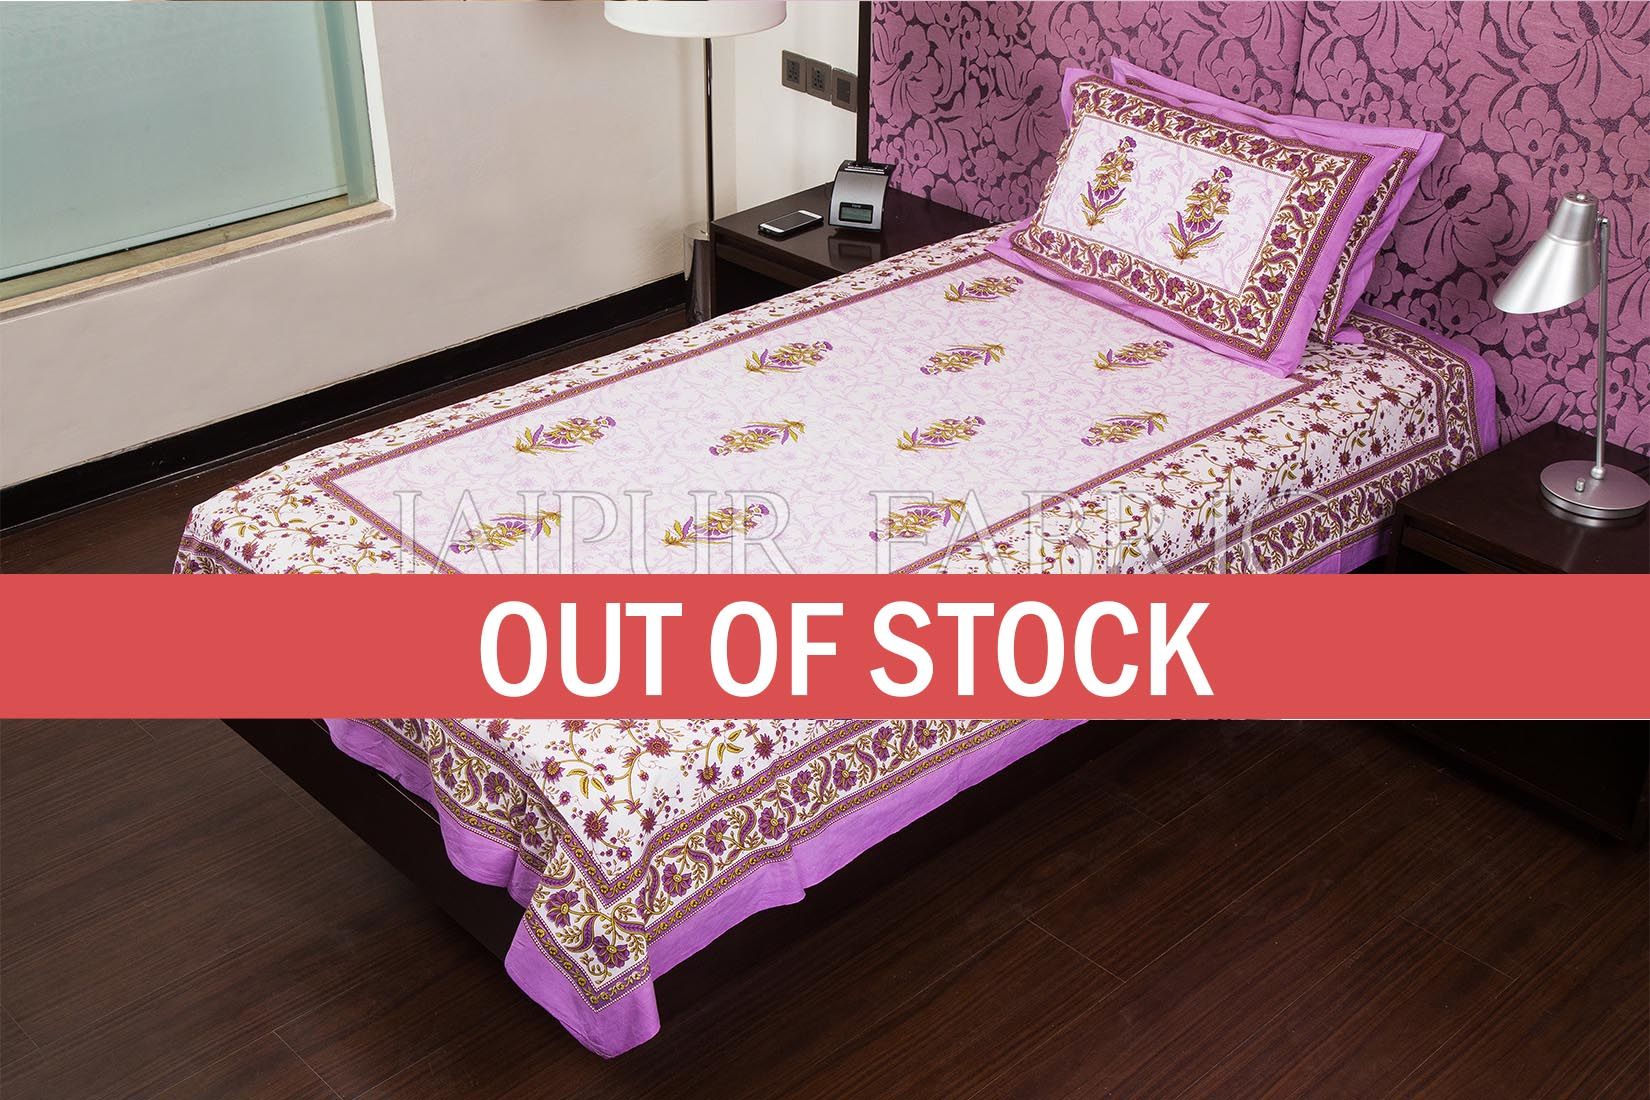 Purple Floral Print Cotton Single Bed Sheet